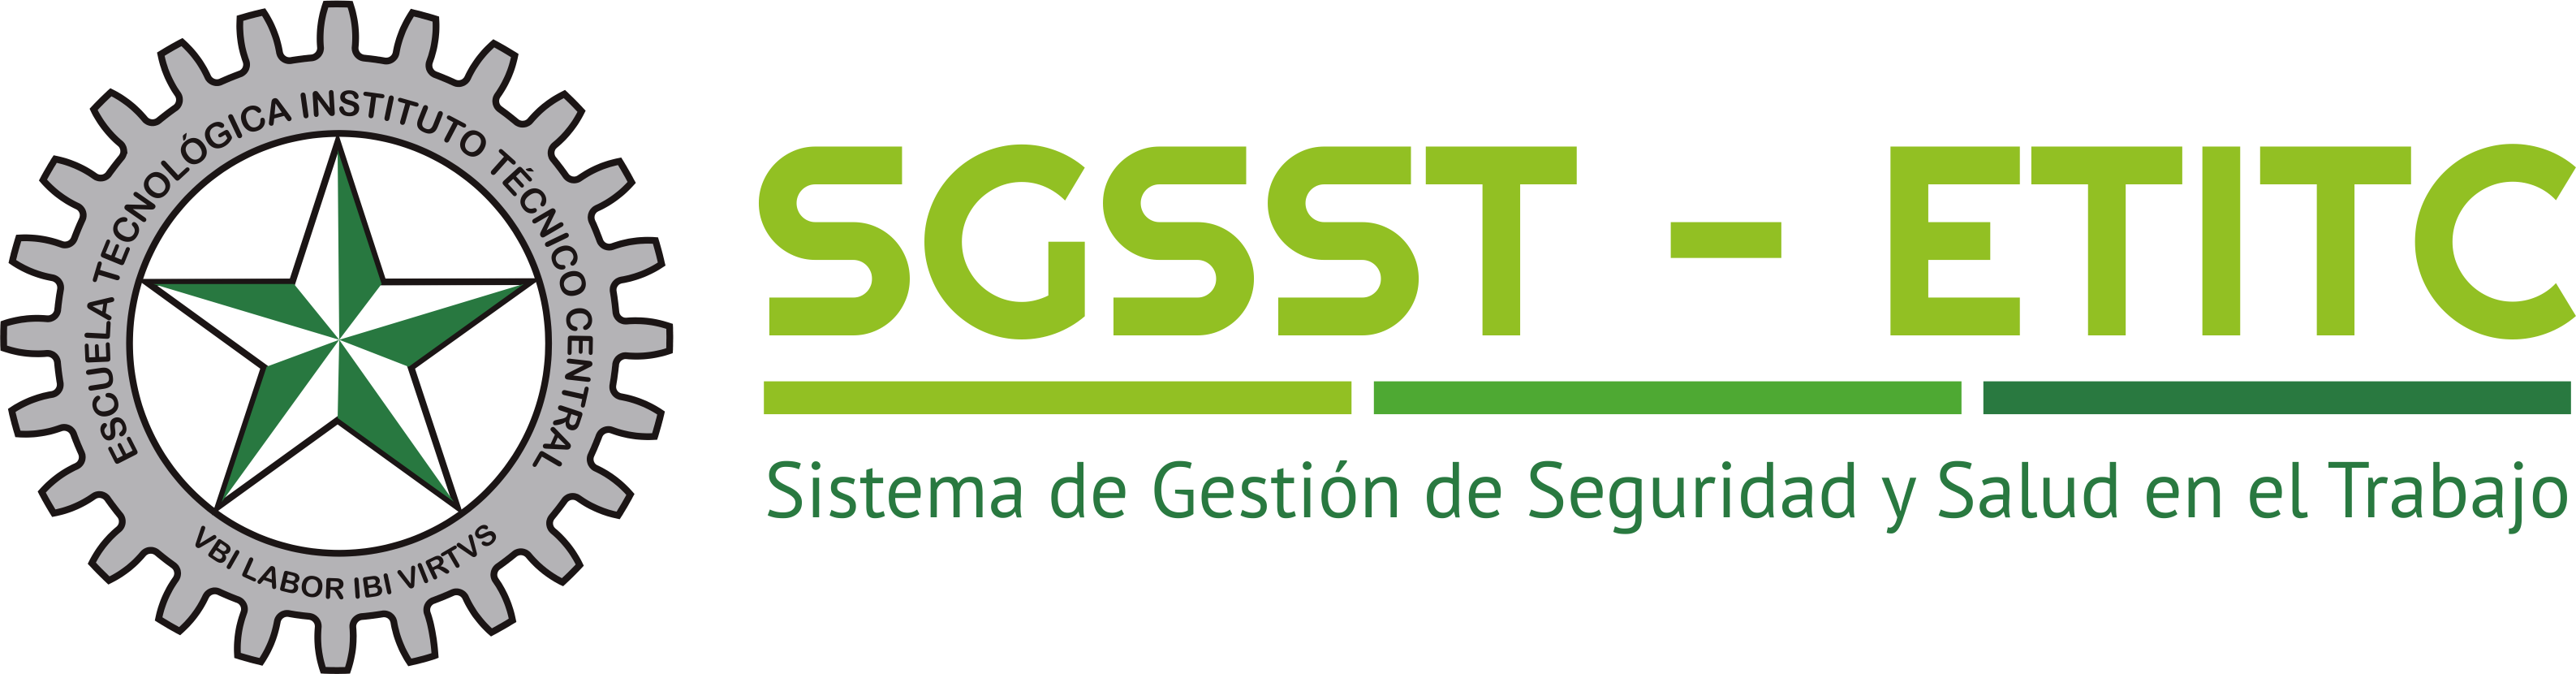 SGSST de la ETITC